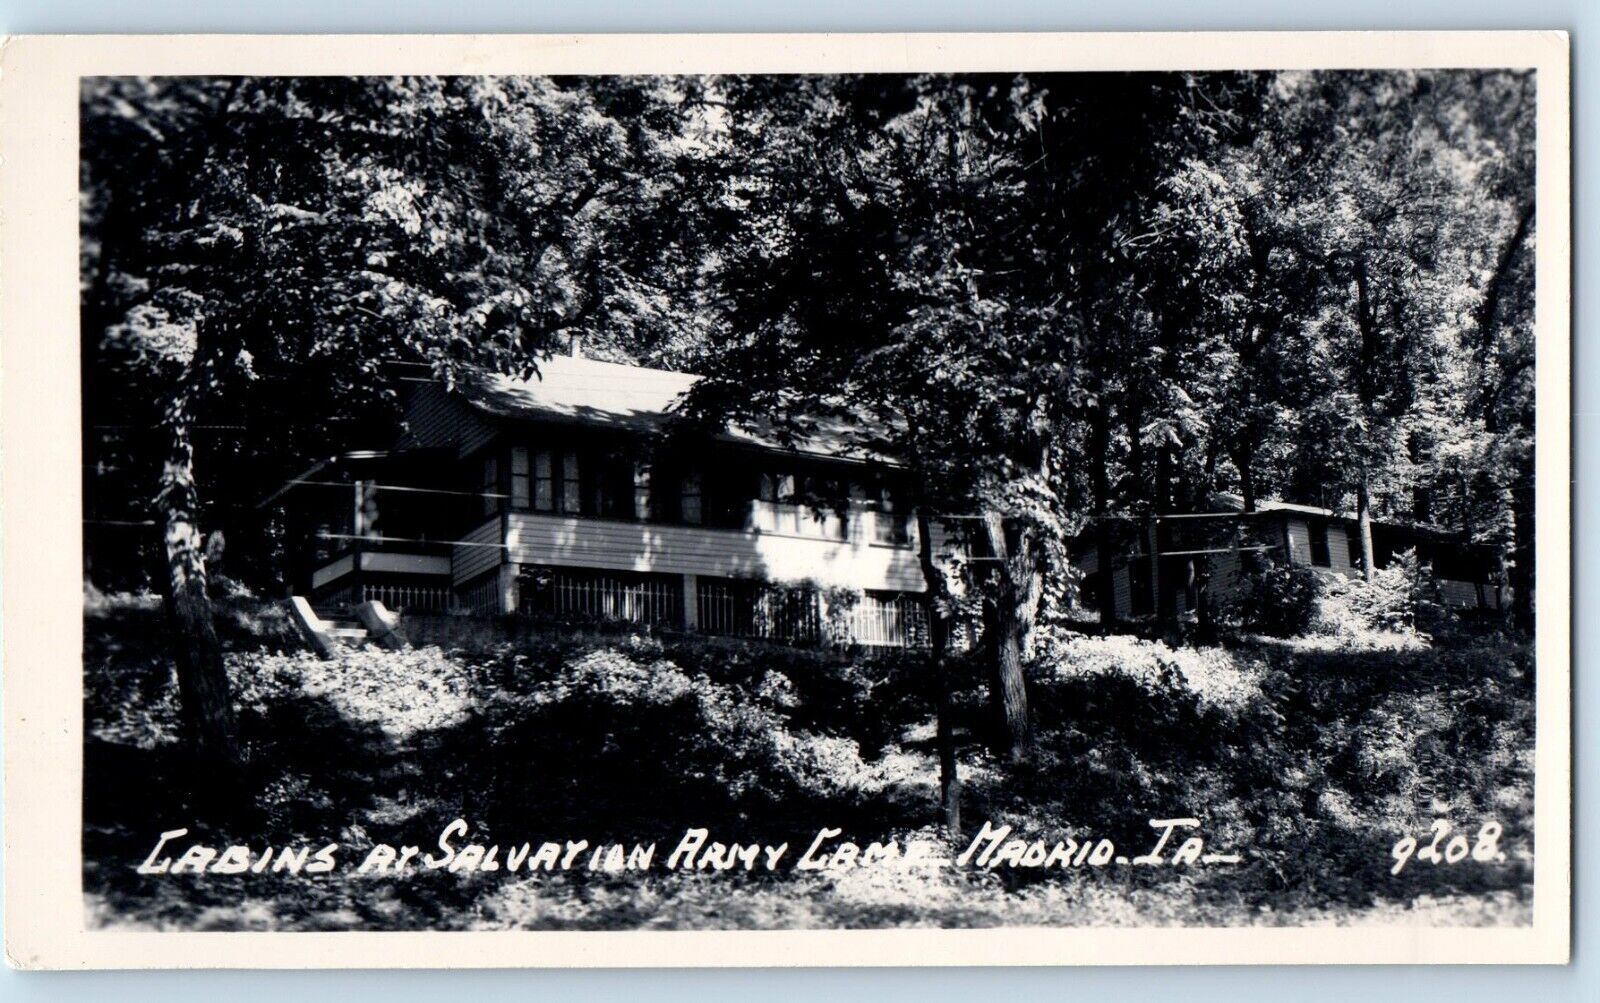 Madrid Iowa IA Postcard RPPC Photo Cabins At Salvayion Army Camp c1930's Vintage